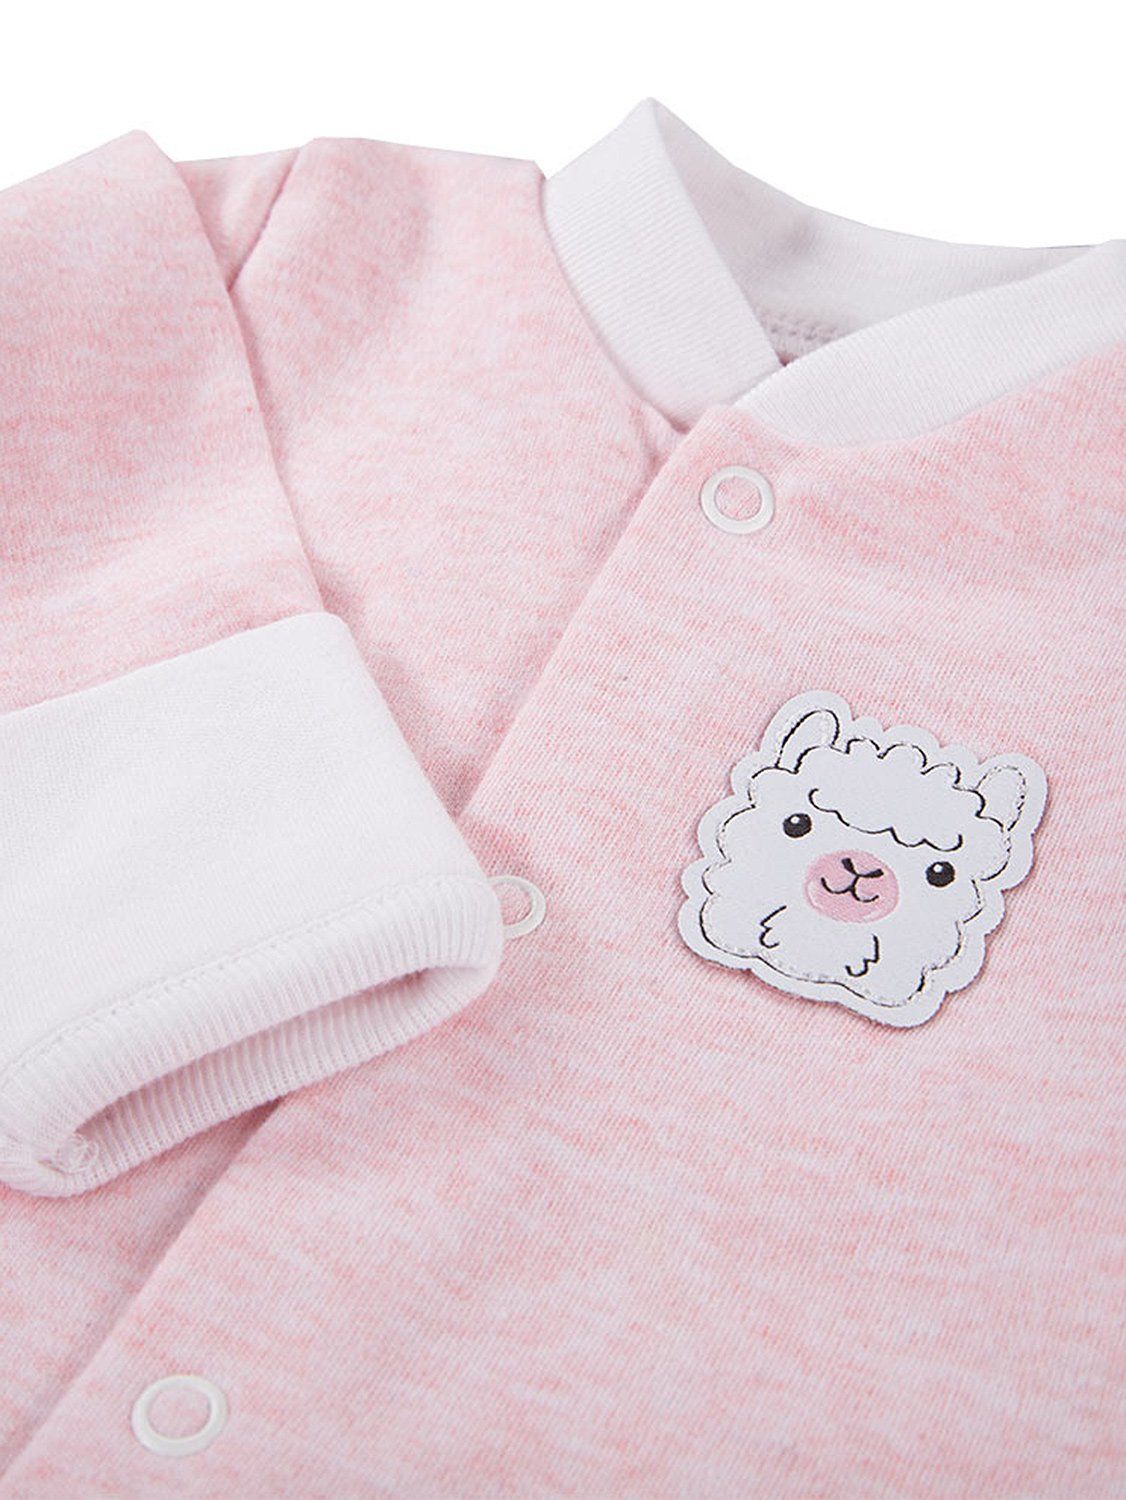 Tiny Baby Footed Sleepsuit, Cute Alpaca Design - Pink - Sleepsuit / Babygrow - EEVI